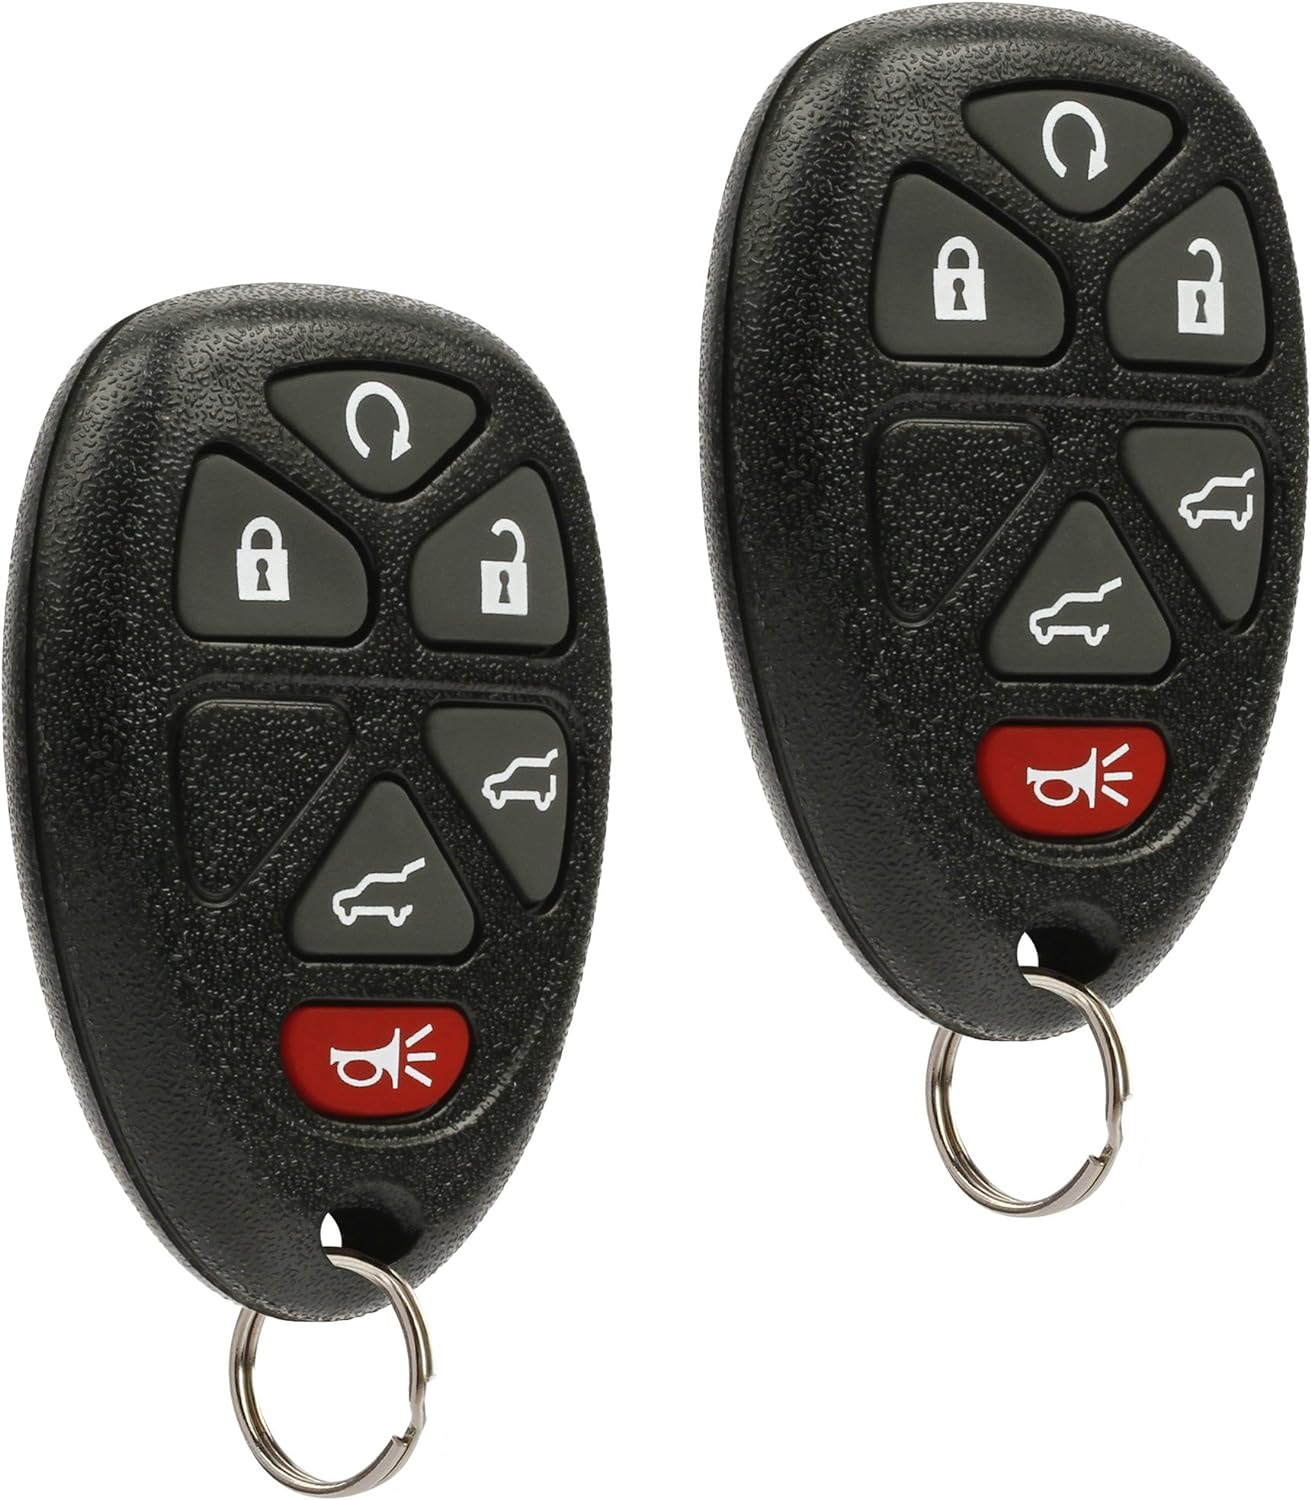 USARemote Car Key Fob Keyless Entry Remote fits 2007-2014 Chevy Tahoe Suburban / 2007-2014 Cadillac Escalade / 2007-2014 GMC Yukon (fits